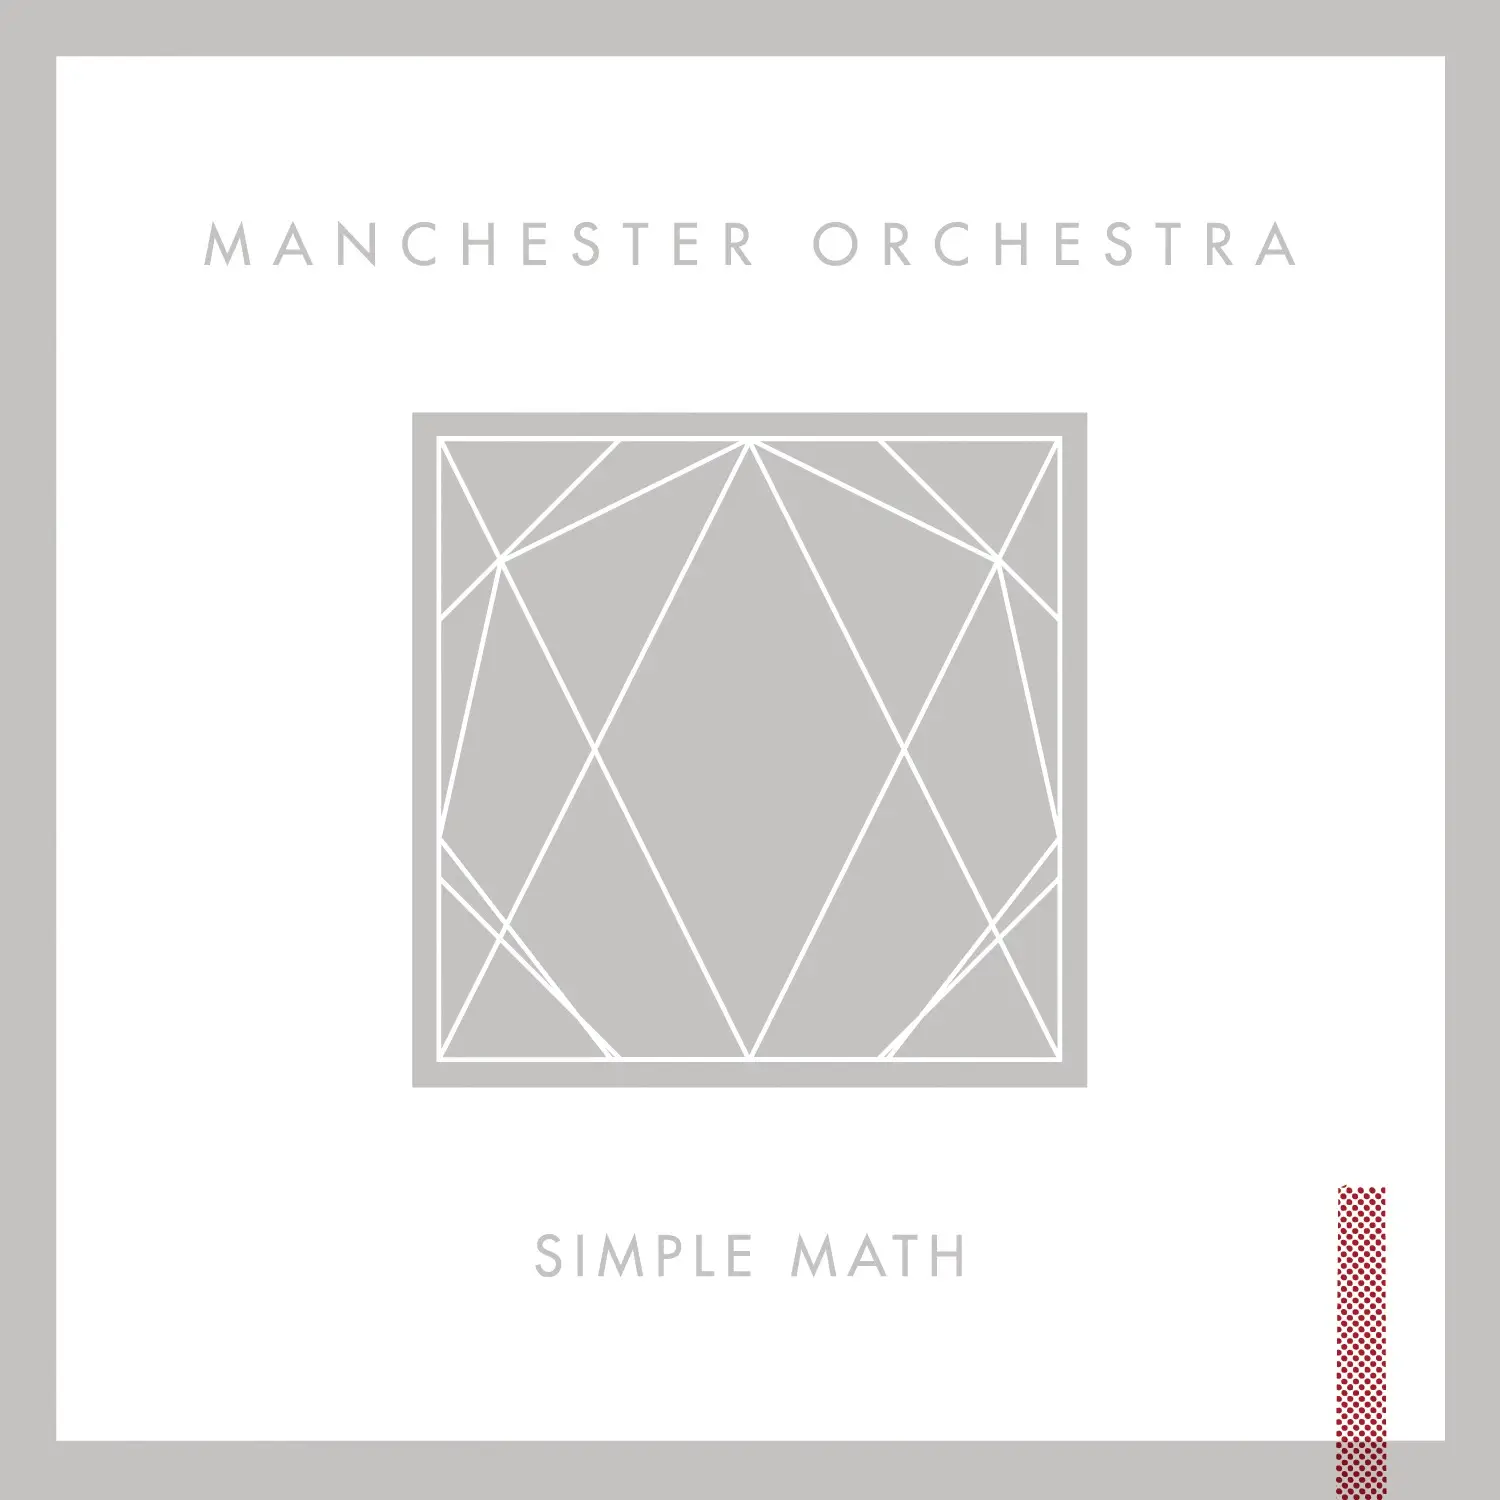 Manchester Orchestra - Simple Math artwork